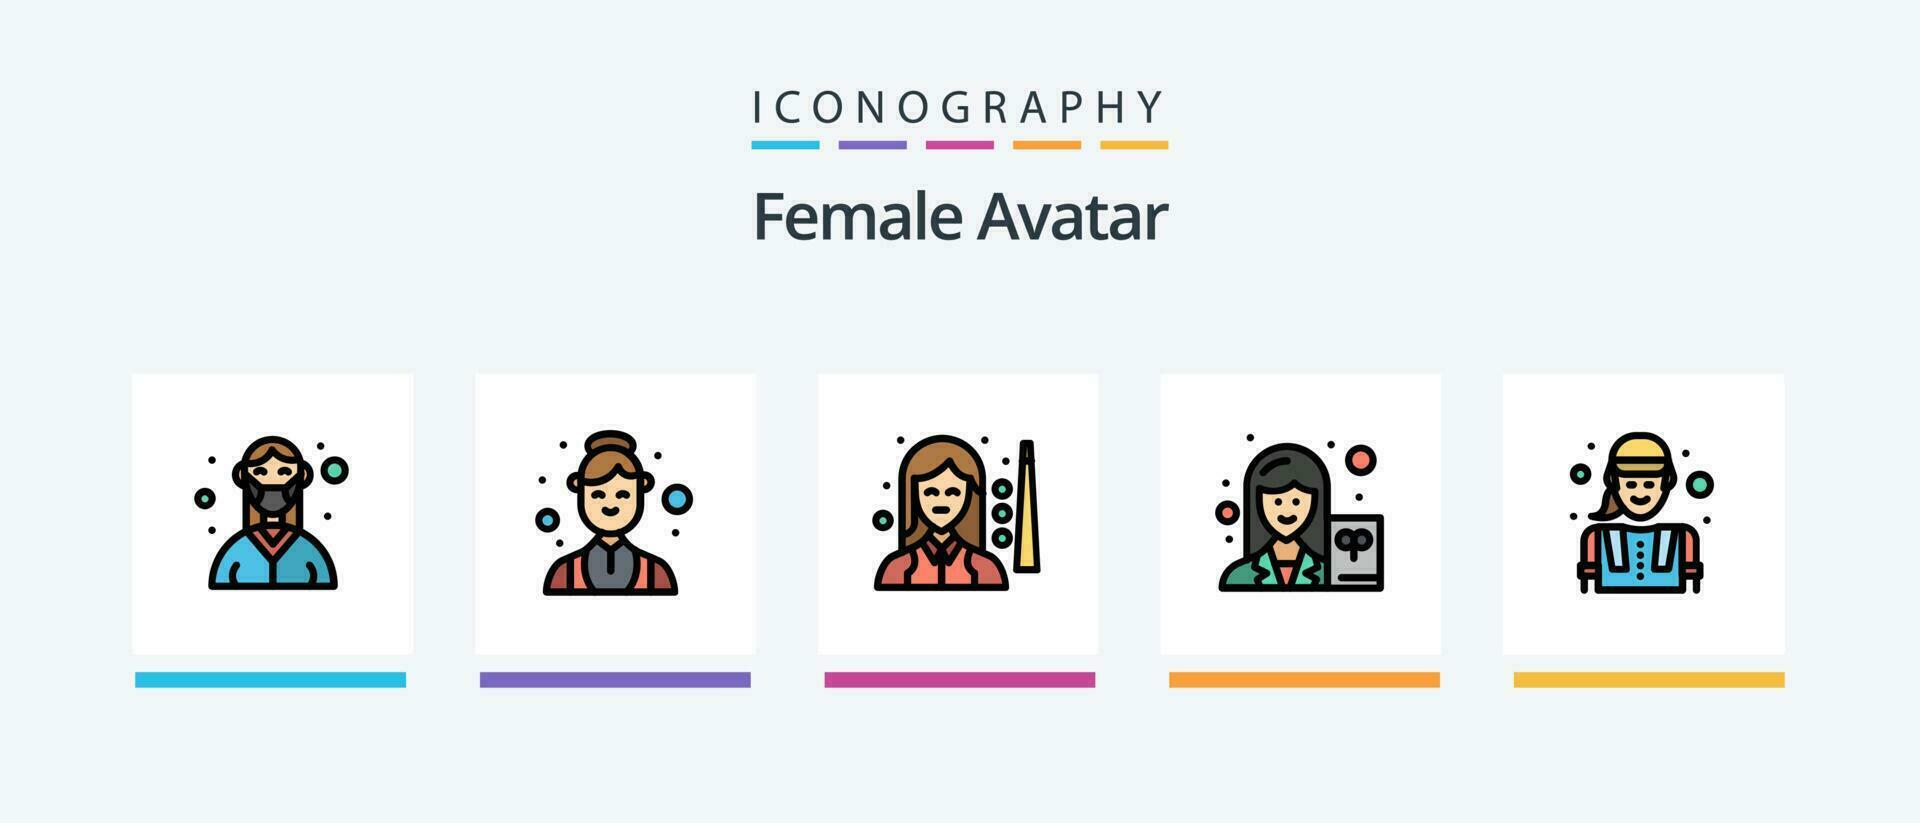 hembra avatar línea lleno 5 5 icono paquete incluso perfil. bailarín. mujer. avatar. femenino. creativo íconos diseño vector